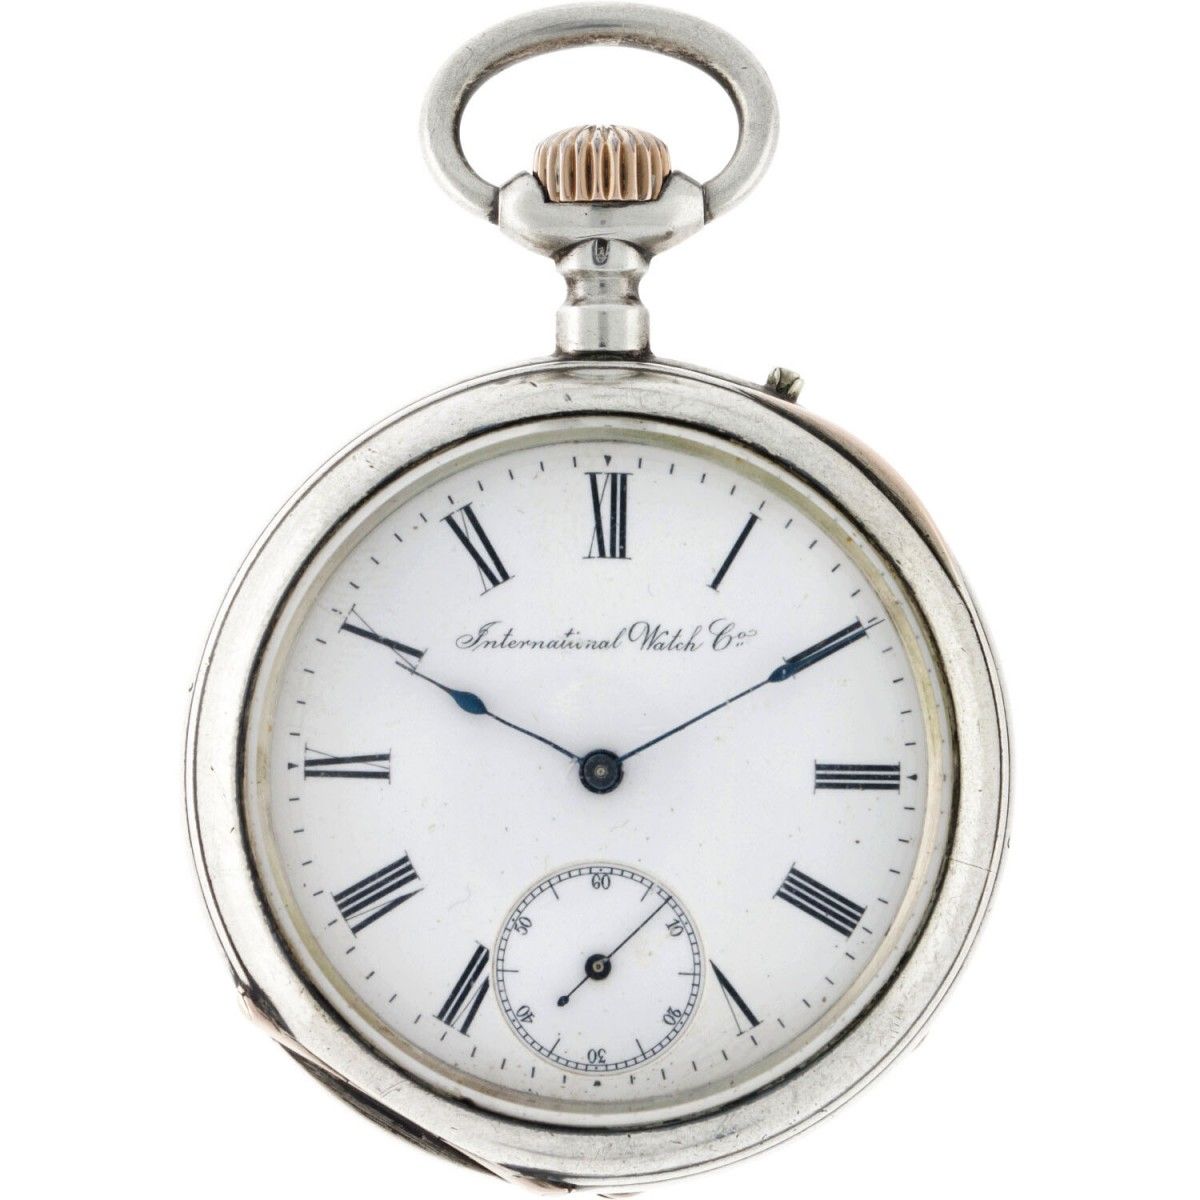 IWC Cylinder Escapement - Men's pocket watch - apprx. 1850. Case: silver - chain&hellip;